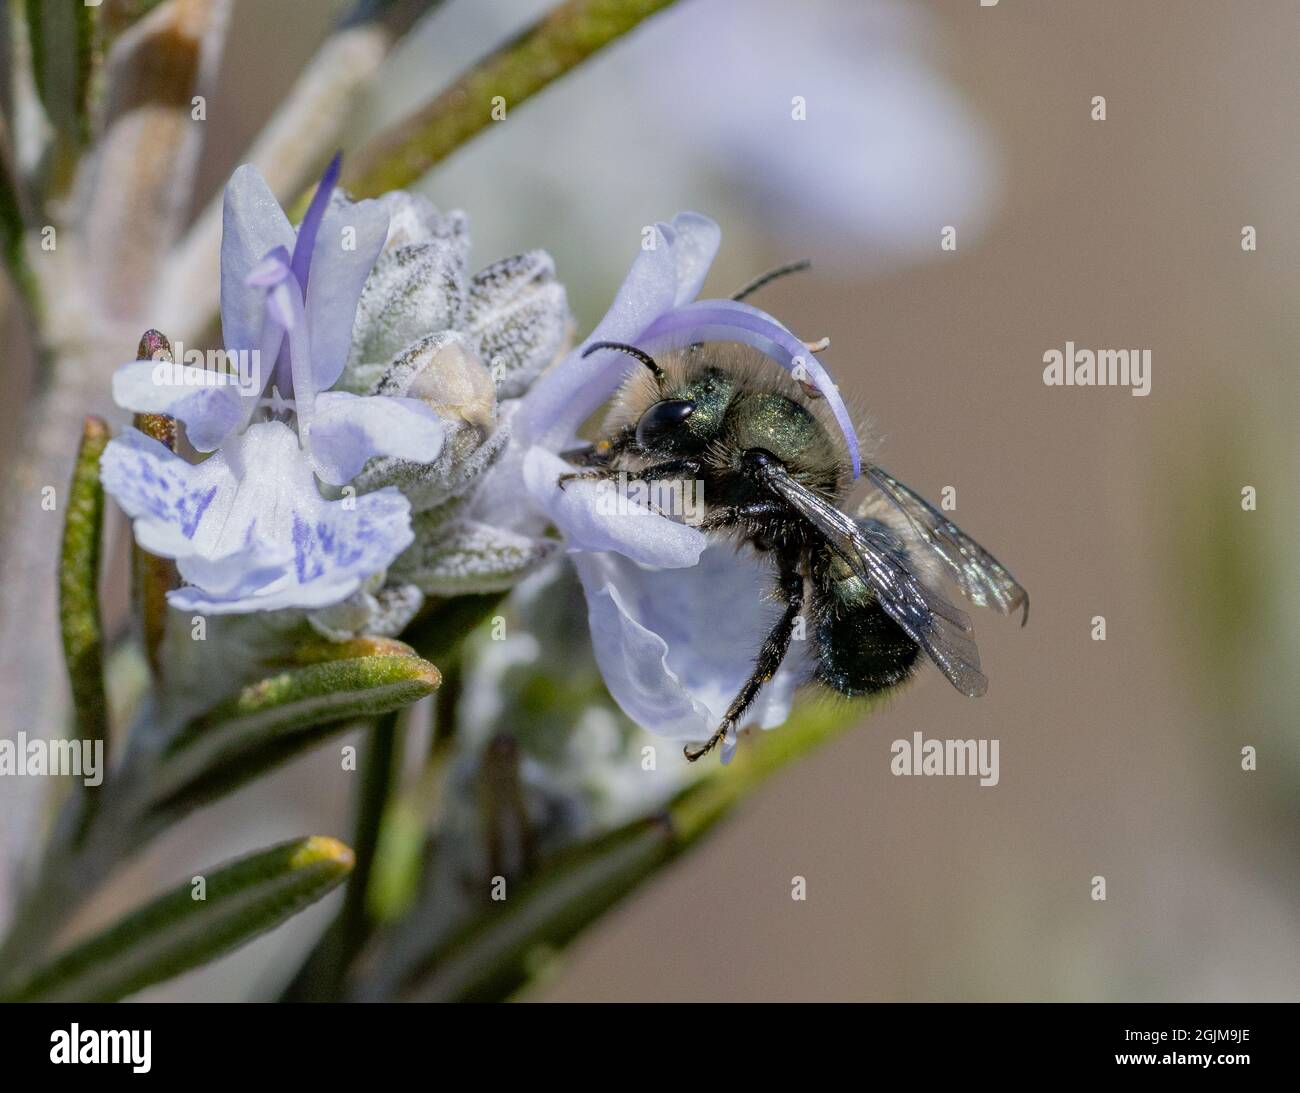 A male blue Mason Bee (Osmia) pollinating a rosemary flower. Stock Photo